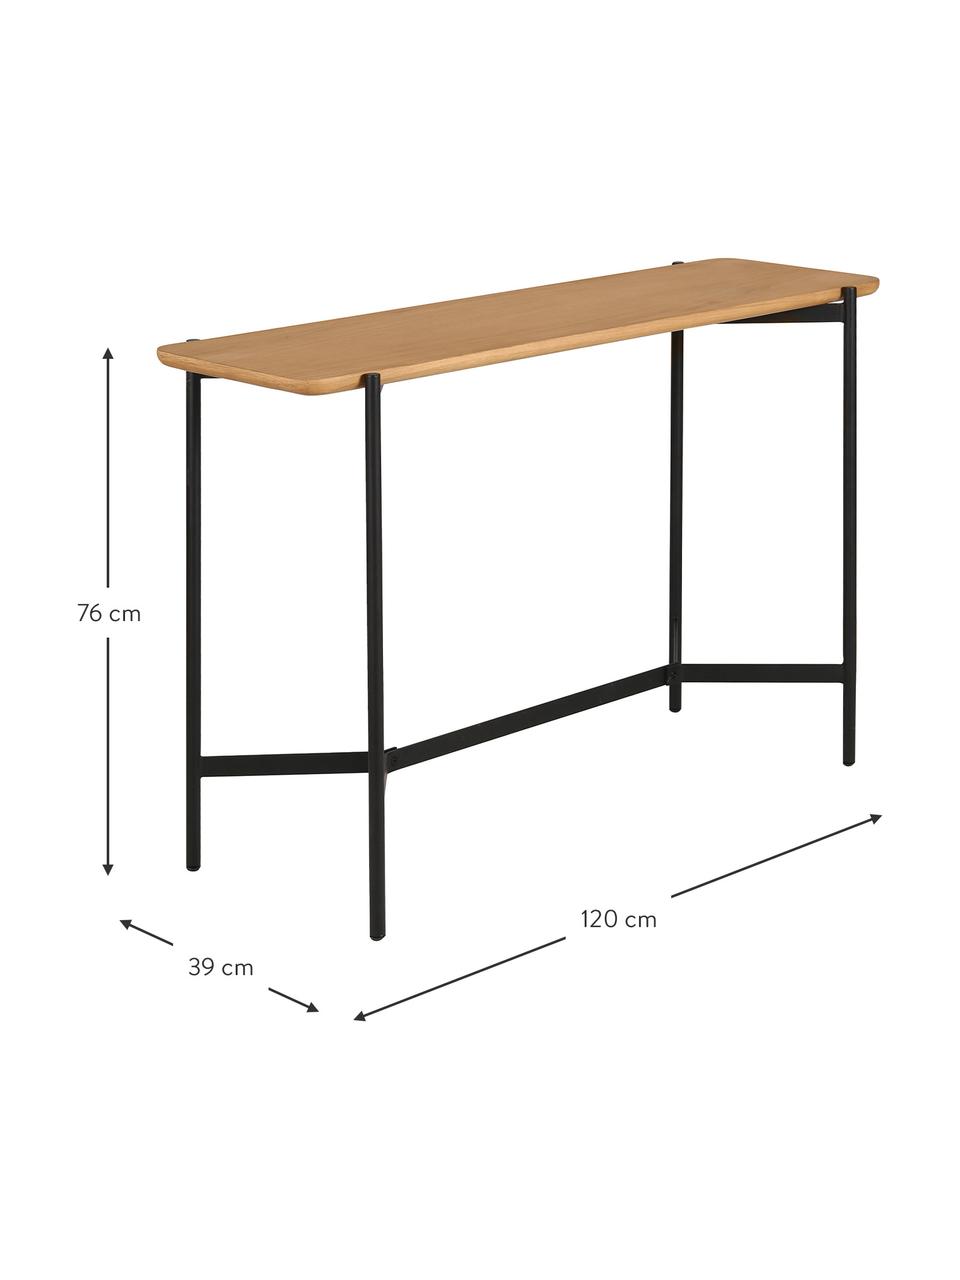 Konzolový stolek z dřeva a kovu Easy, Černá, hnědá